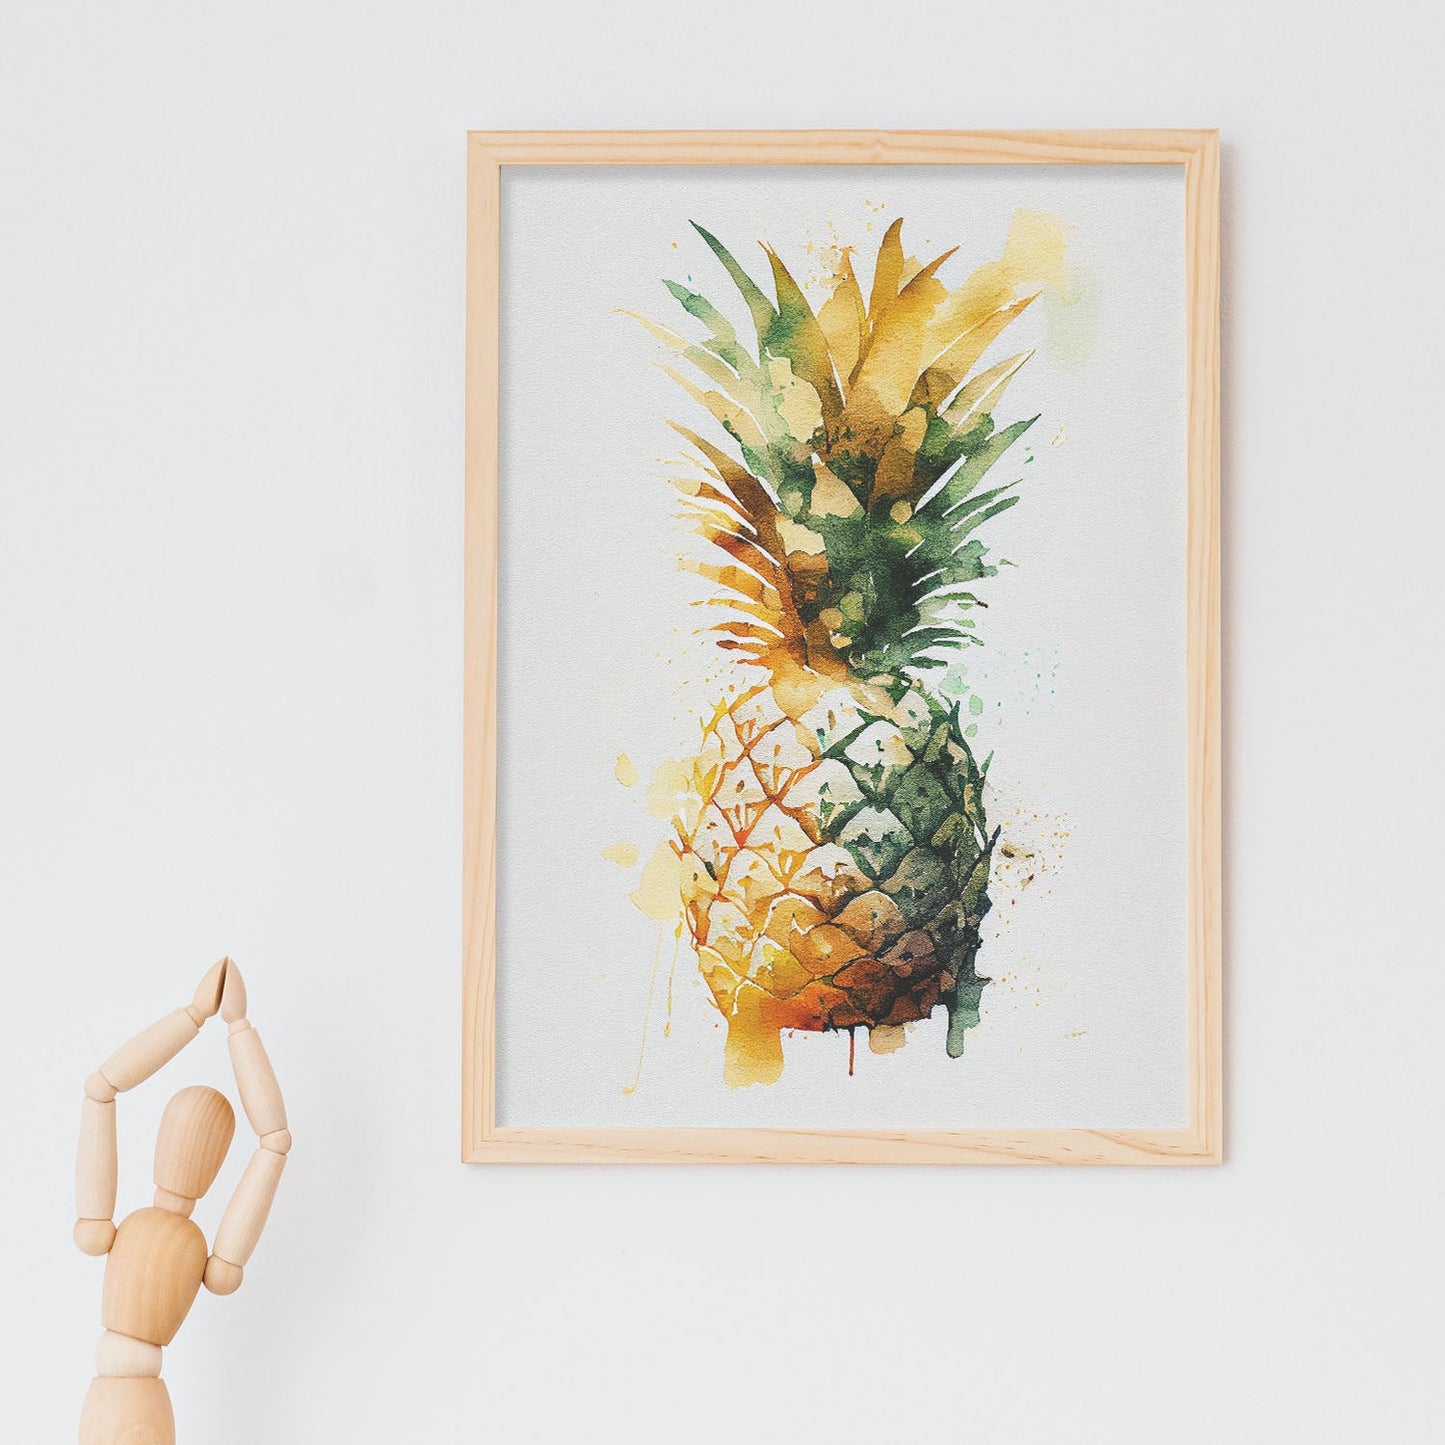 Nacnic minimalist Pineapple_2. Aesthetic Wall Art Prints for Bedroom or Living Room Design.